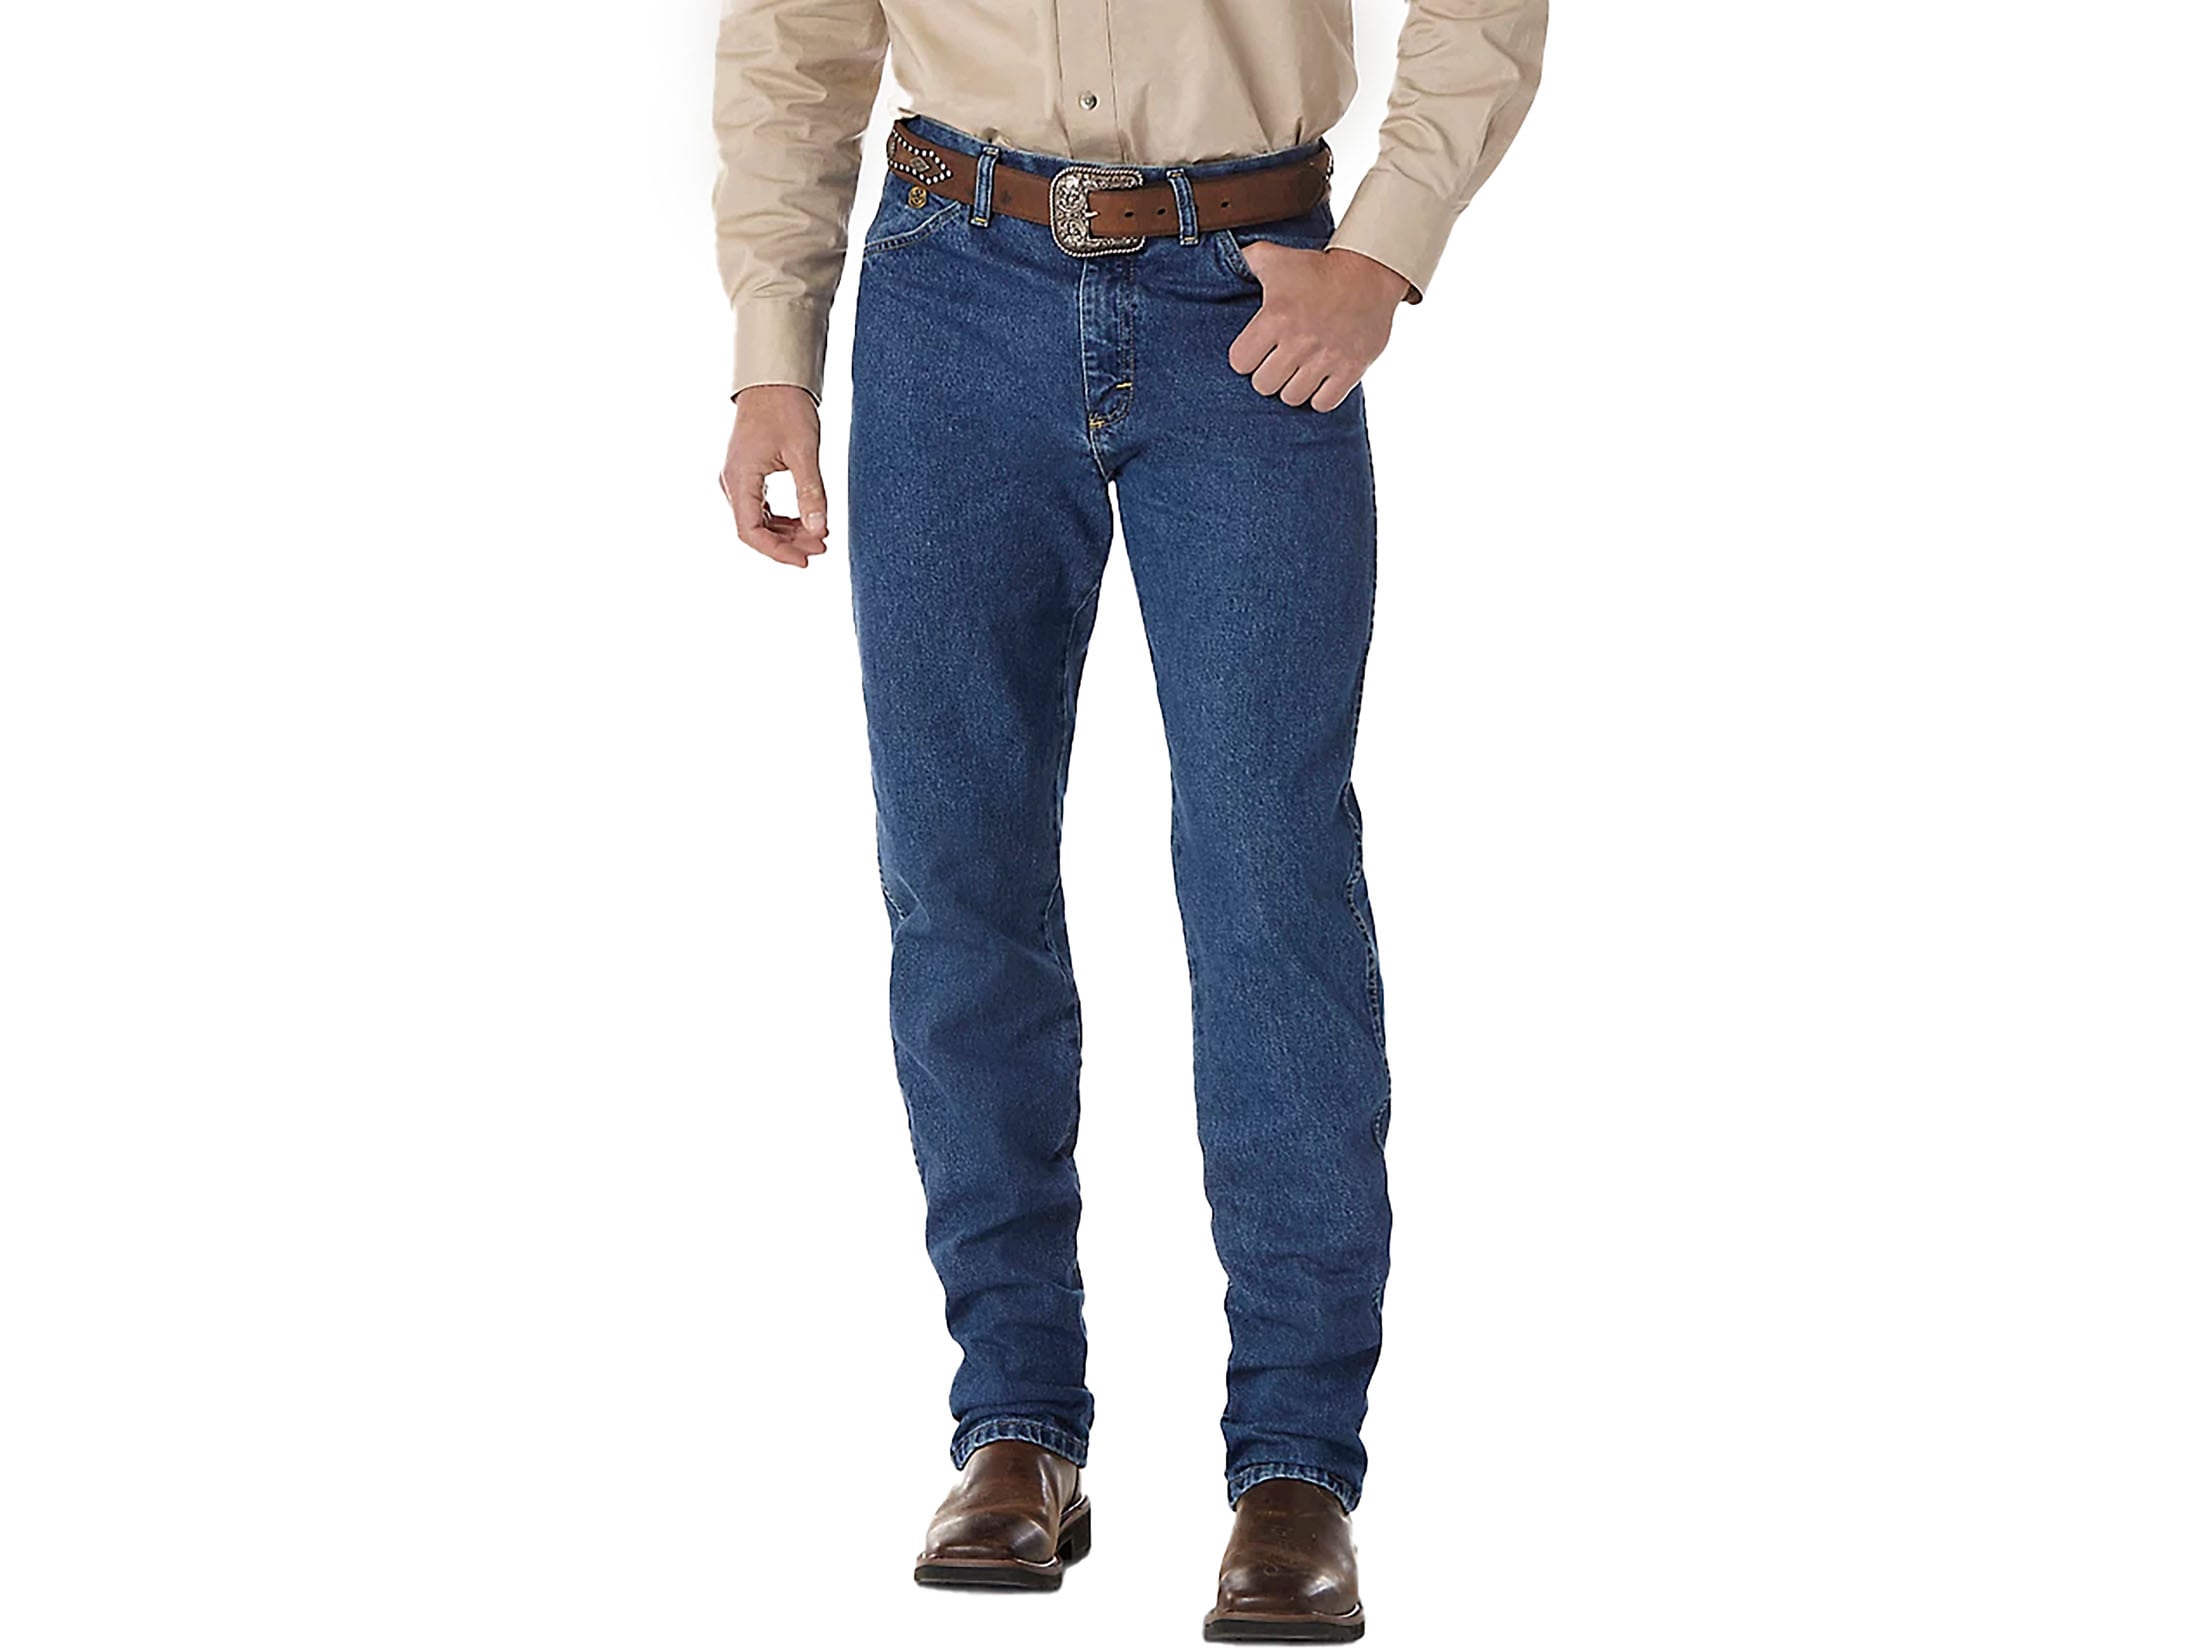 Wrangler Men's George Strait Cowboy Cut Original Jeans Heavyweight